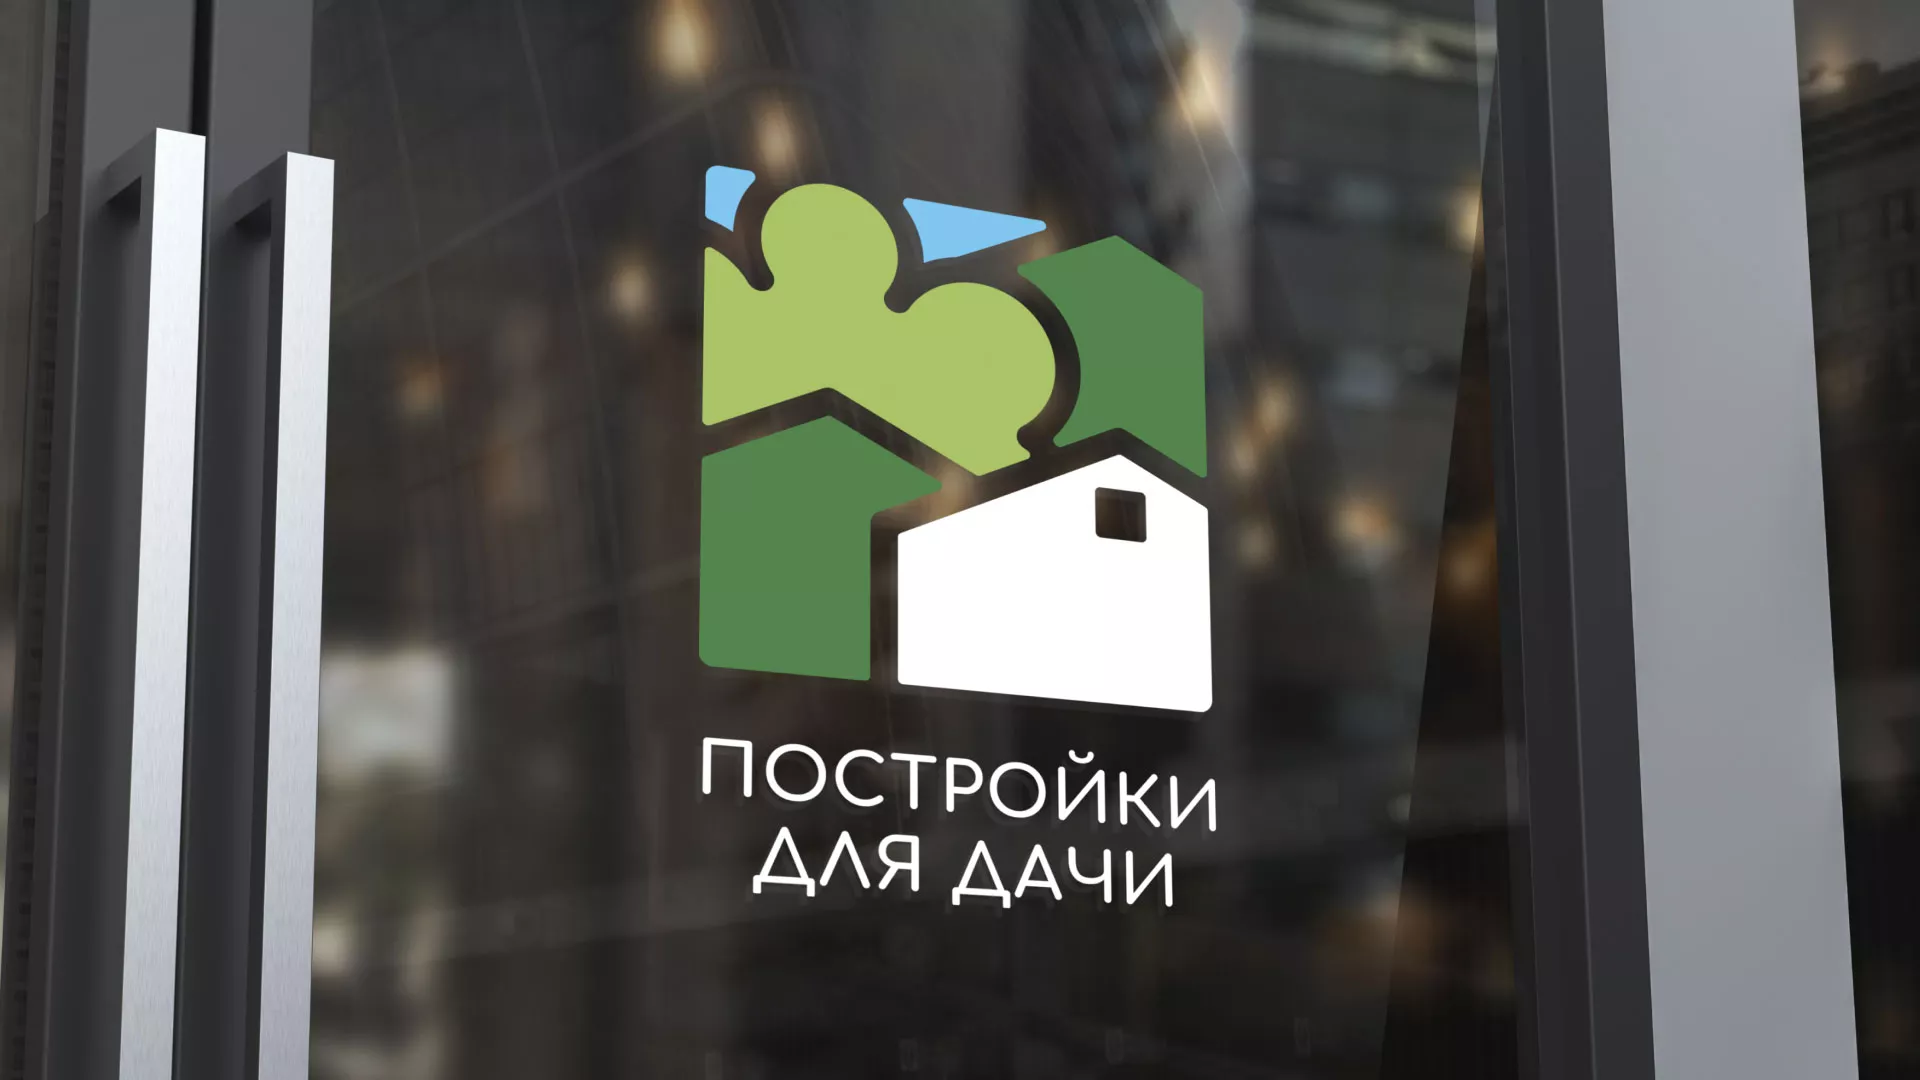 Разработка логотипа в Талдоме для компании «Постройки для дачи»